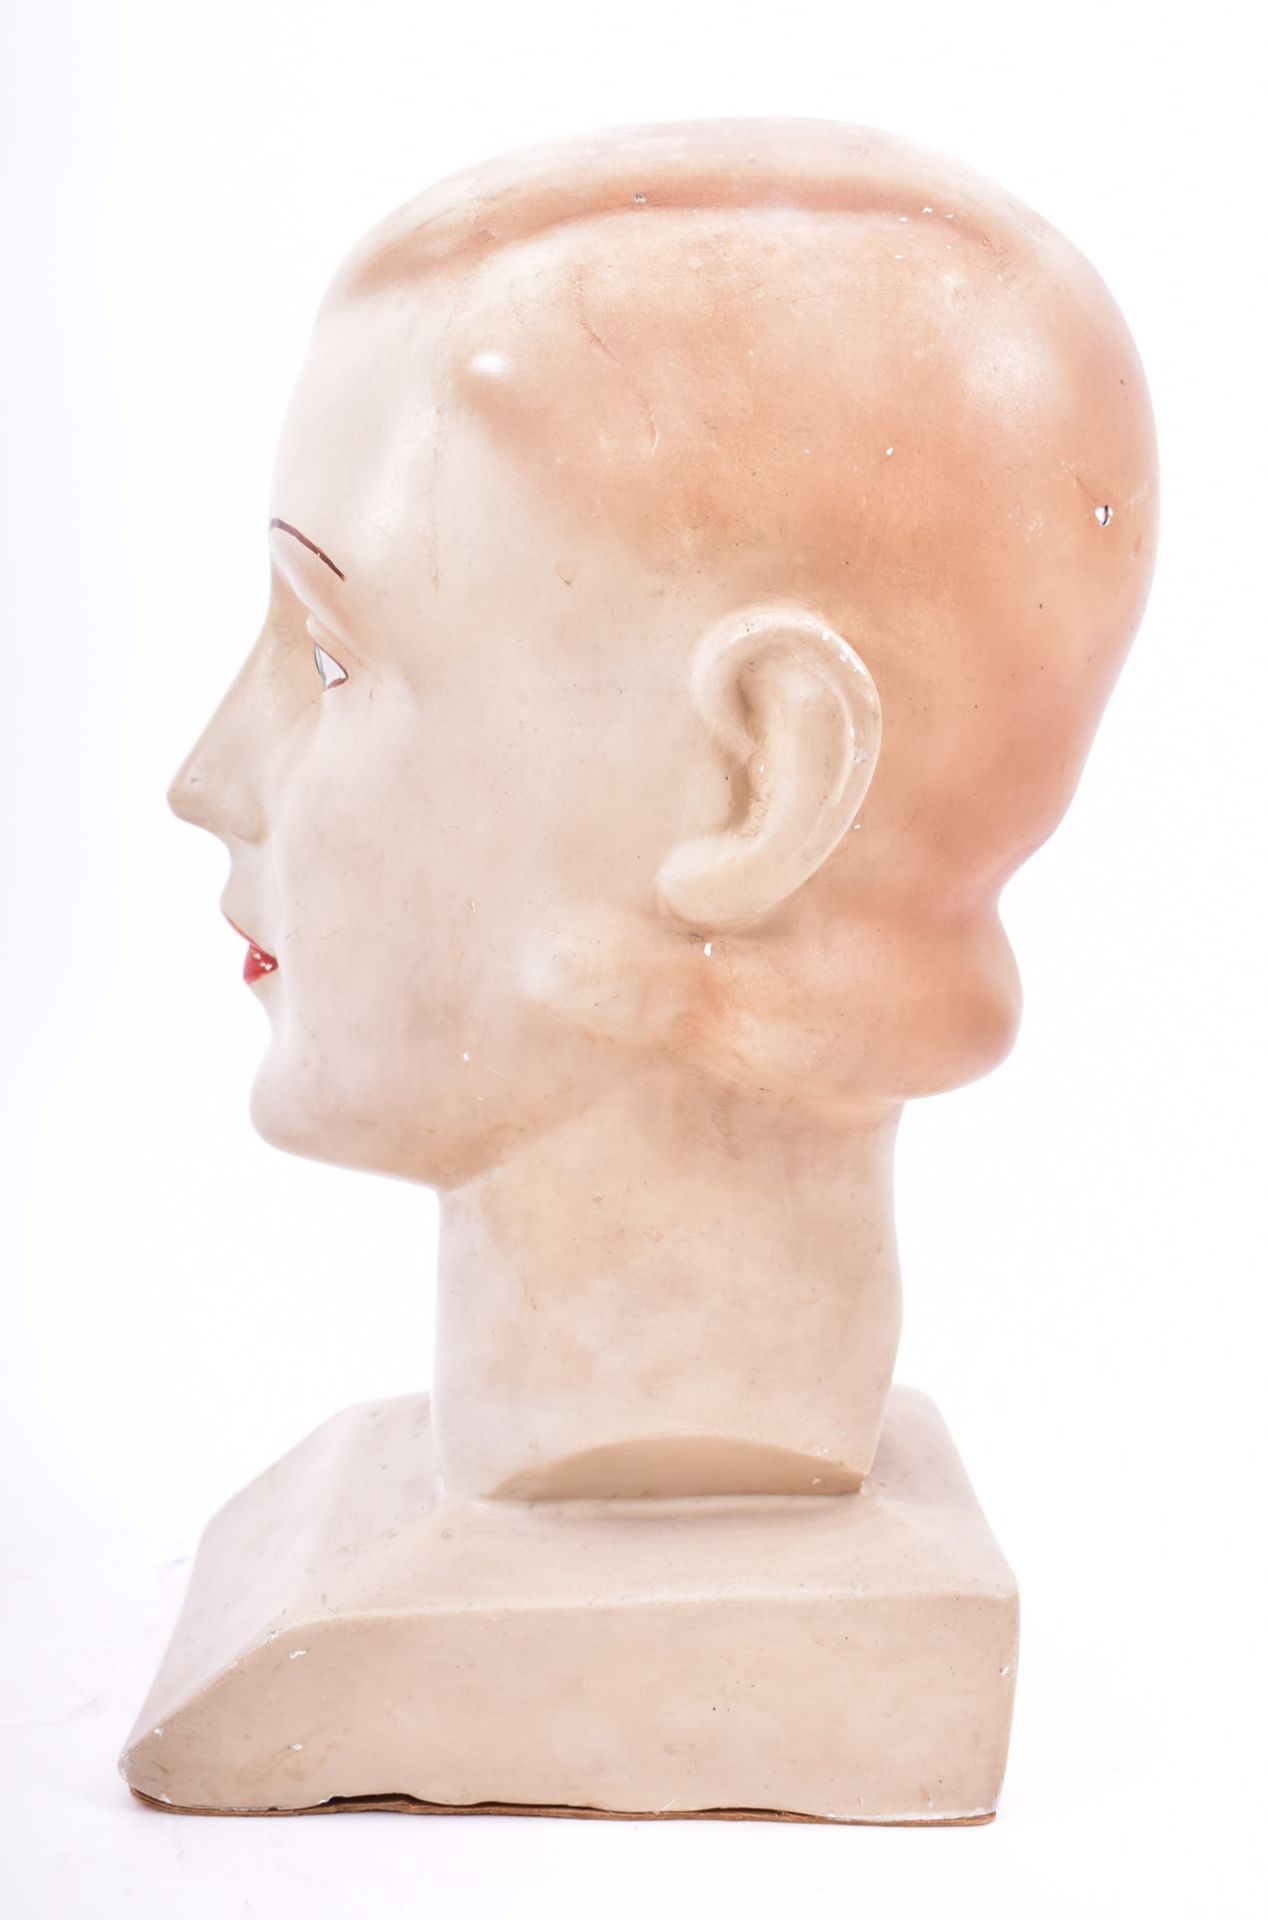 VINTAGE 1930S ART DECO SHOP POINT OF DISPLAY MANNEQUIN HEAD - Image 3 of 6